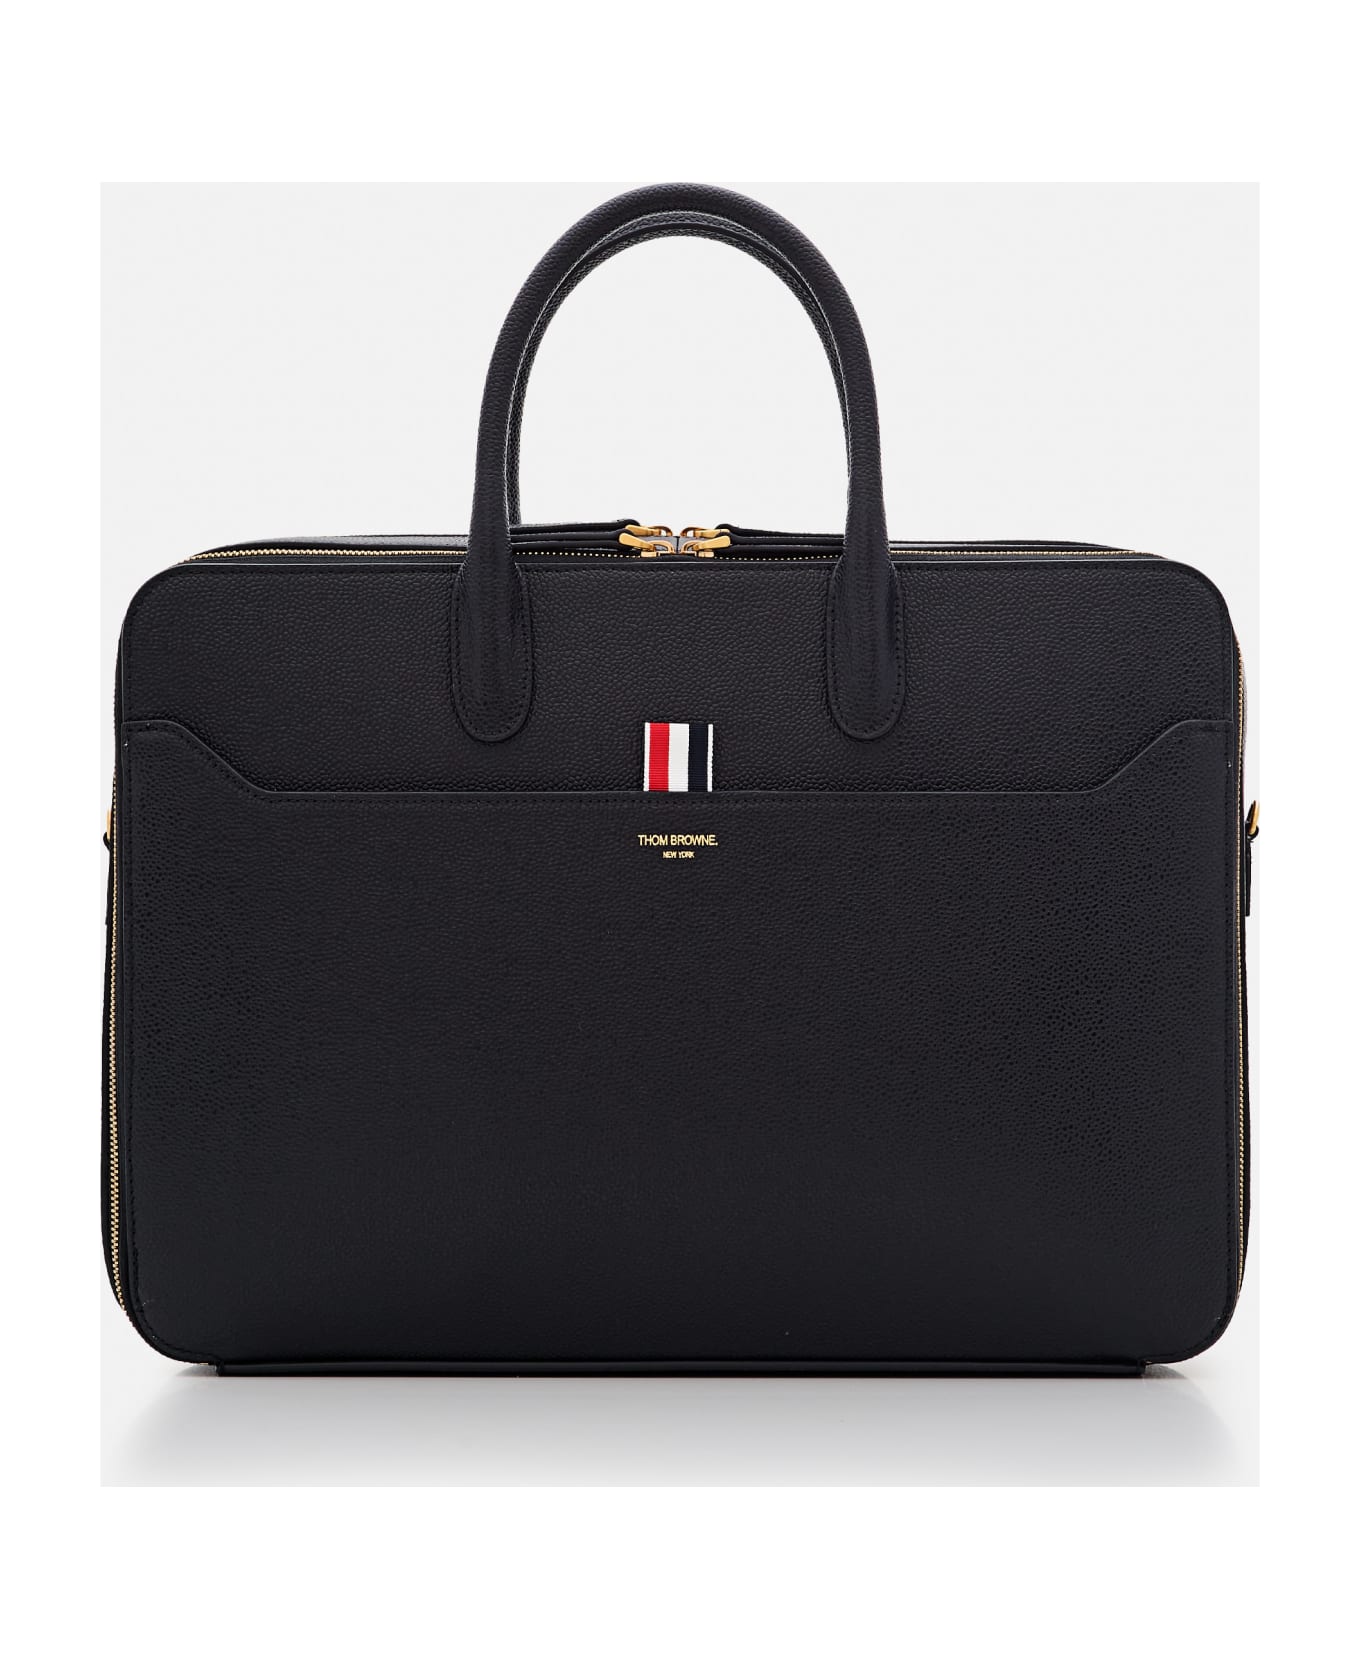 Thom Browne Leather Business Bag - Black